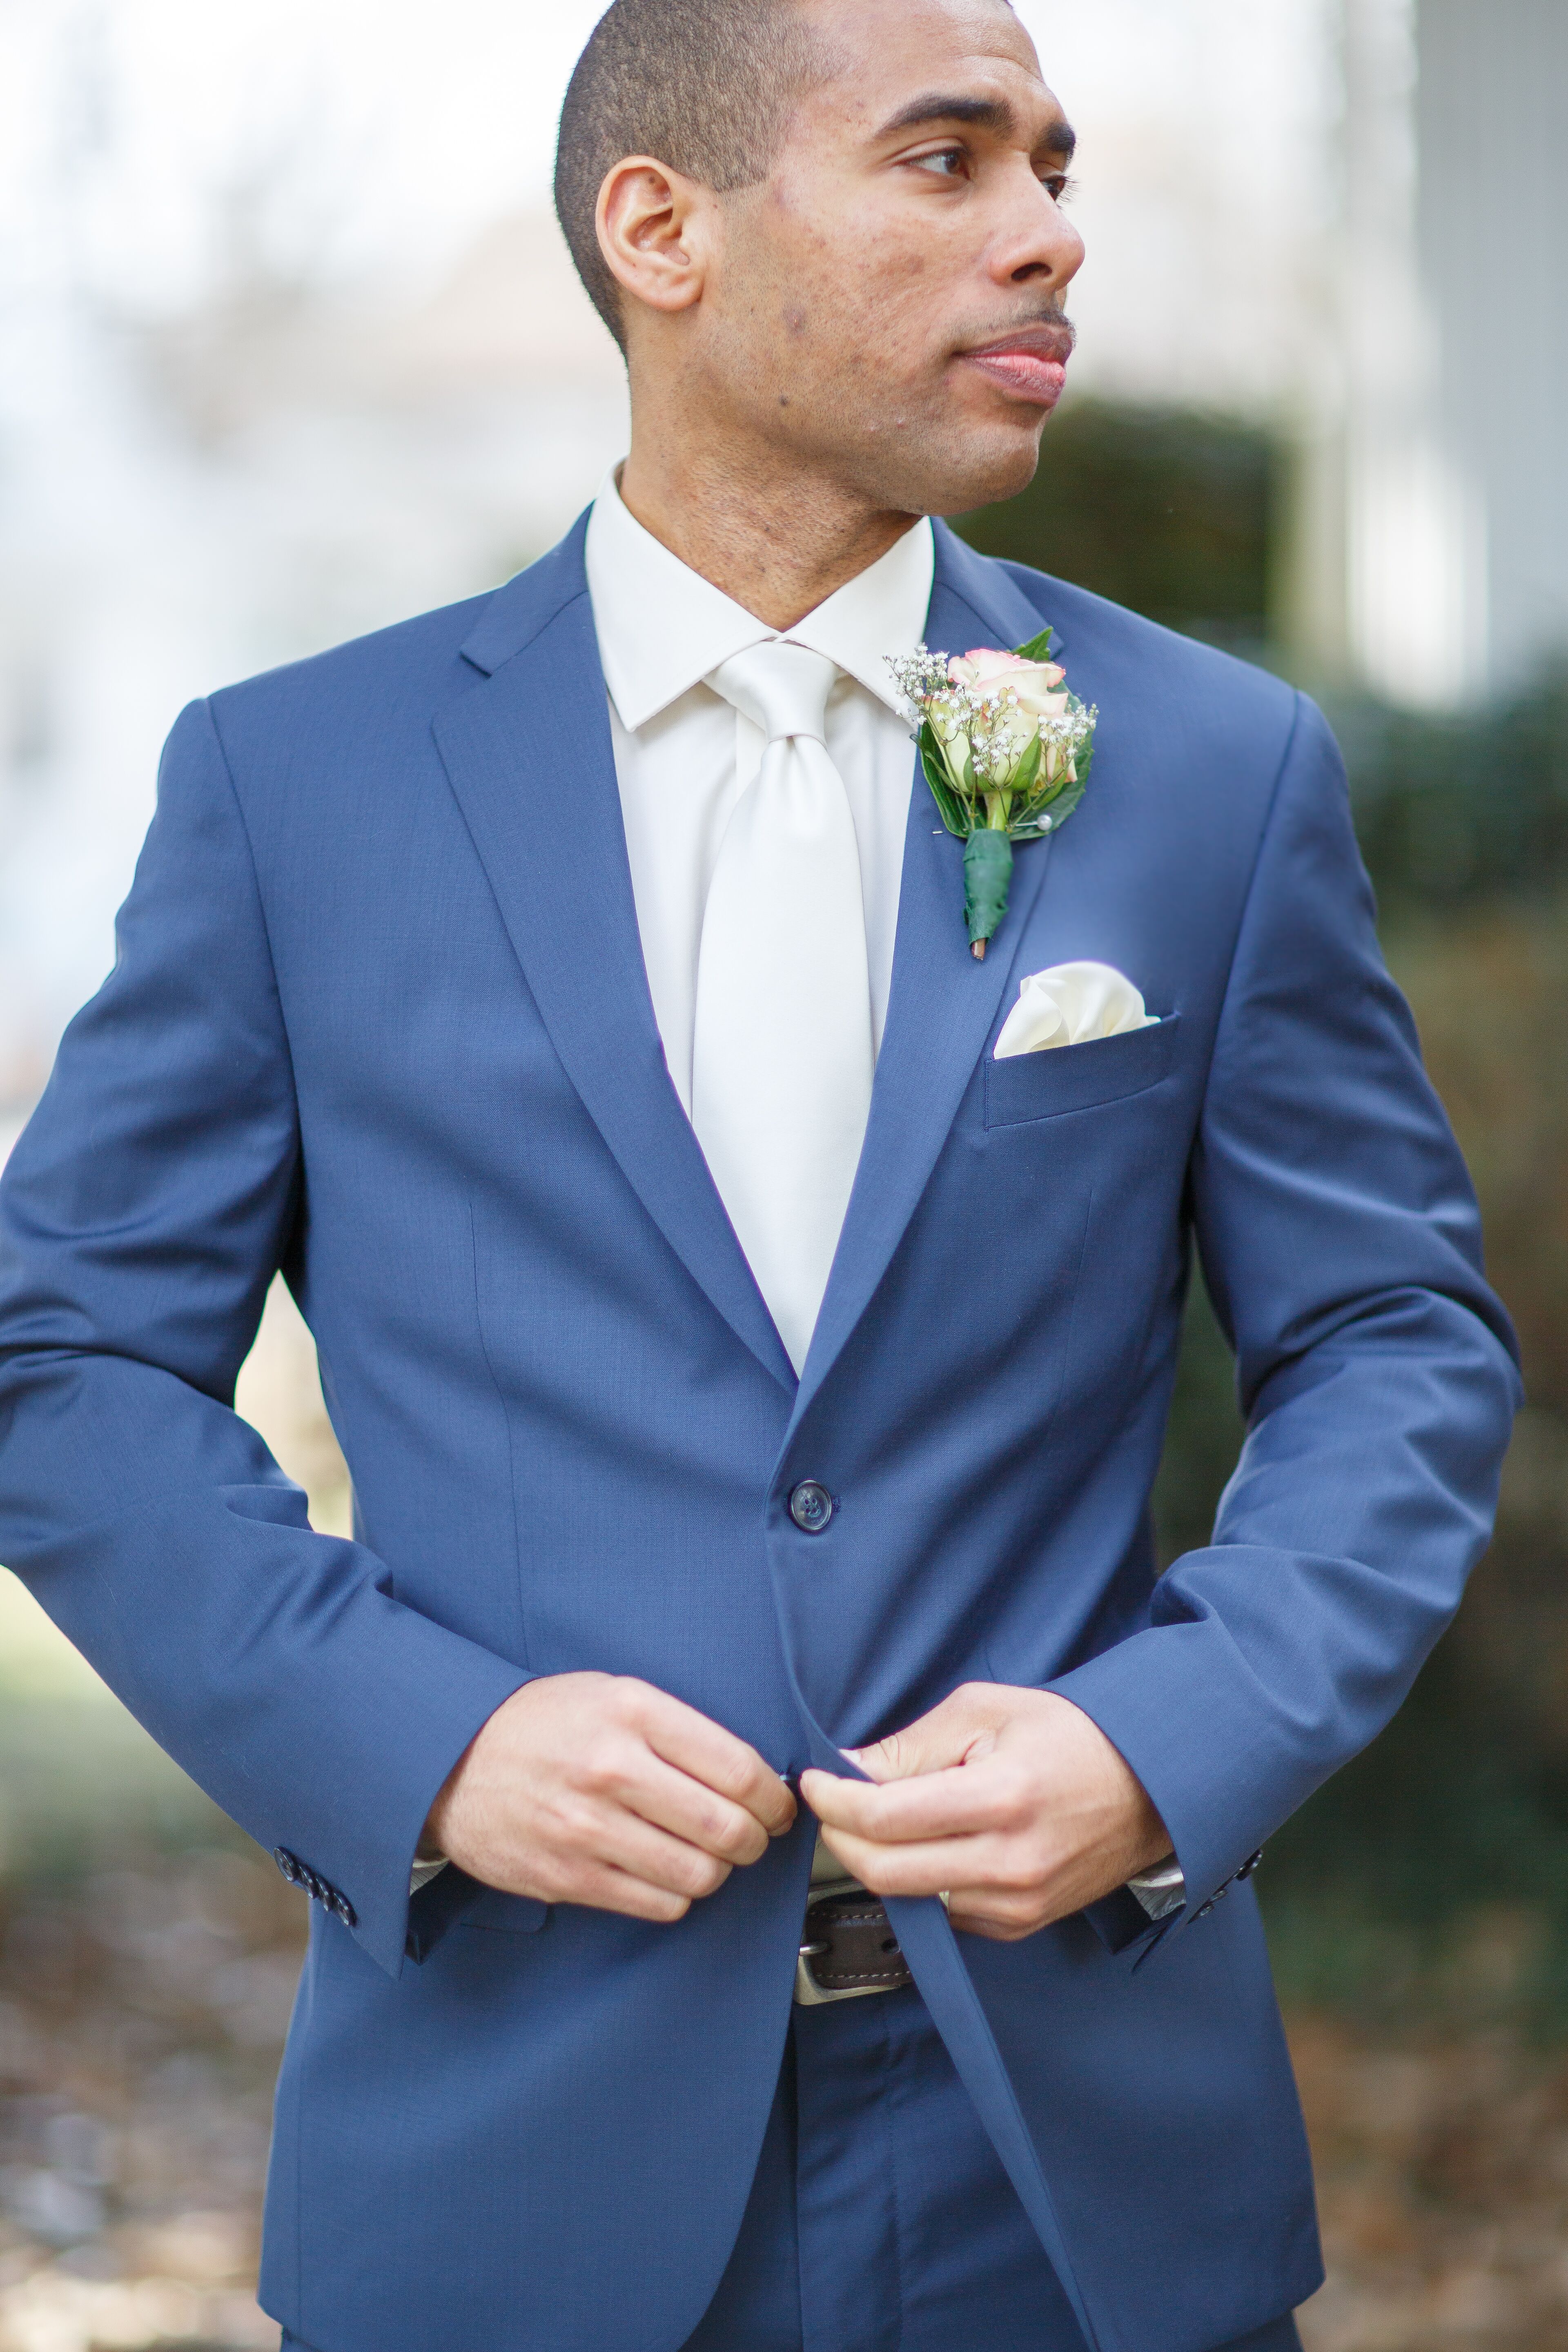 white tie white shirt blue suit